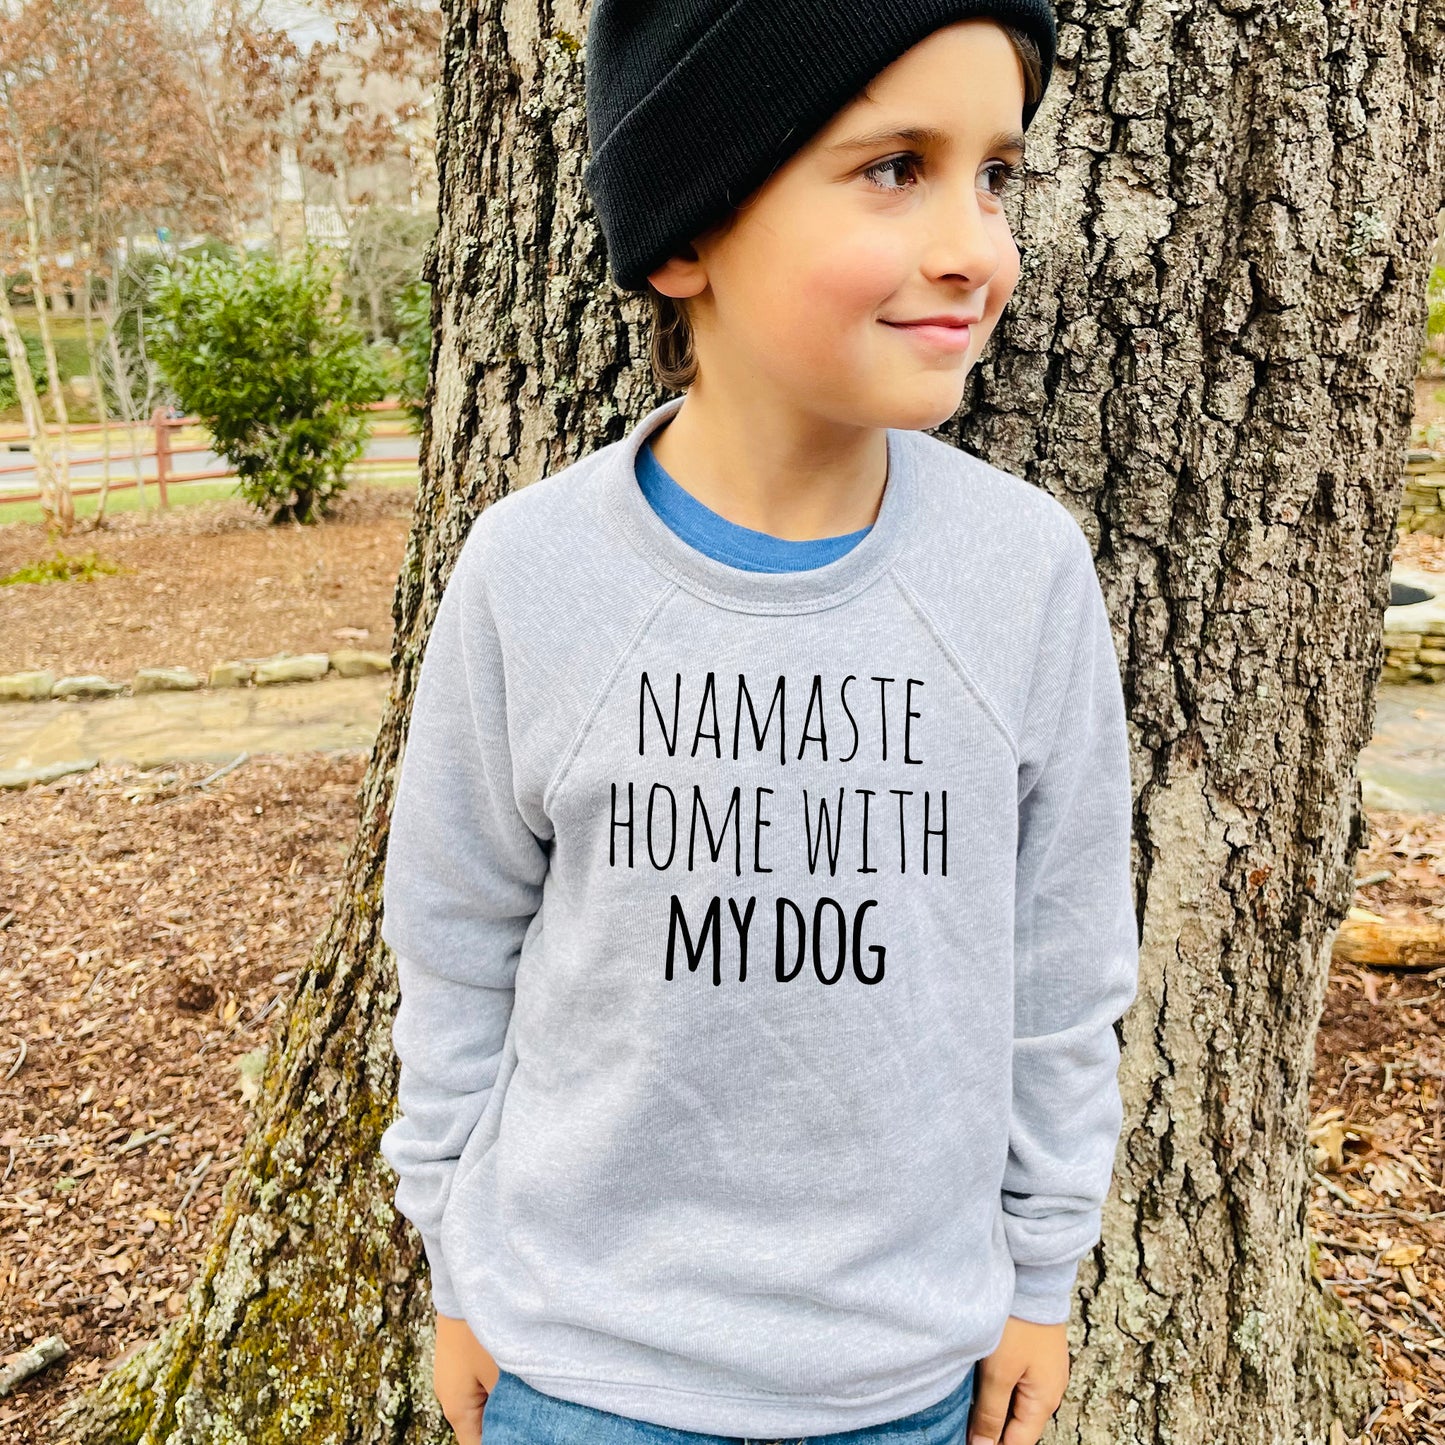 Namaste Home With My Dog - Kid's Sweatshirt - Heather Gray or Mauve